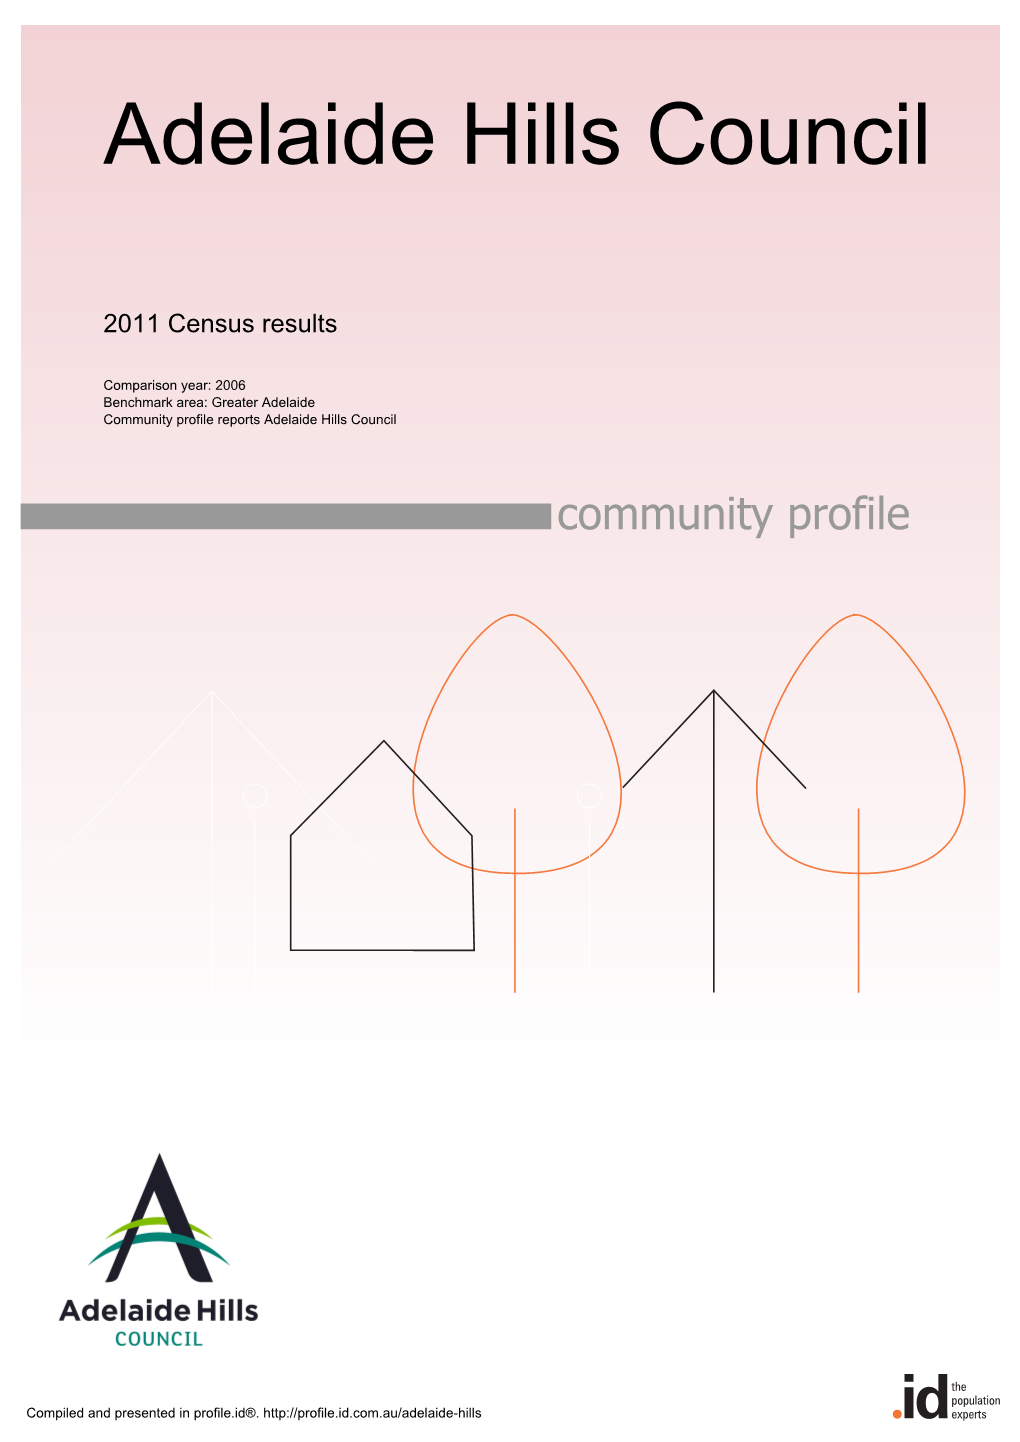 COUNCIL-Community-Profile-2011